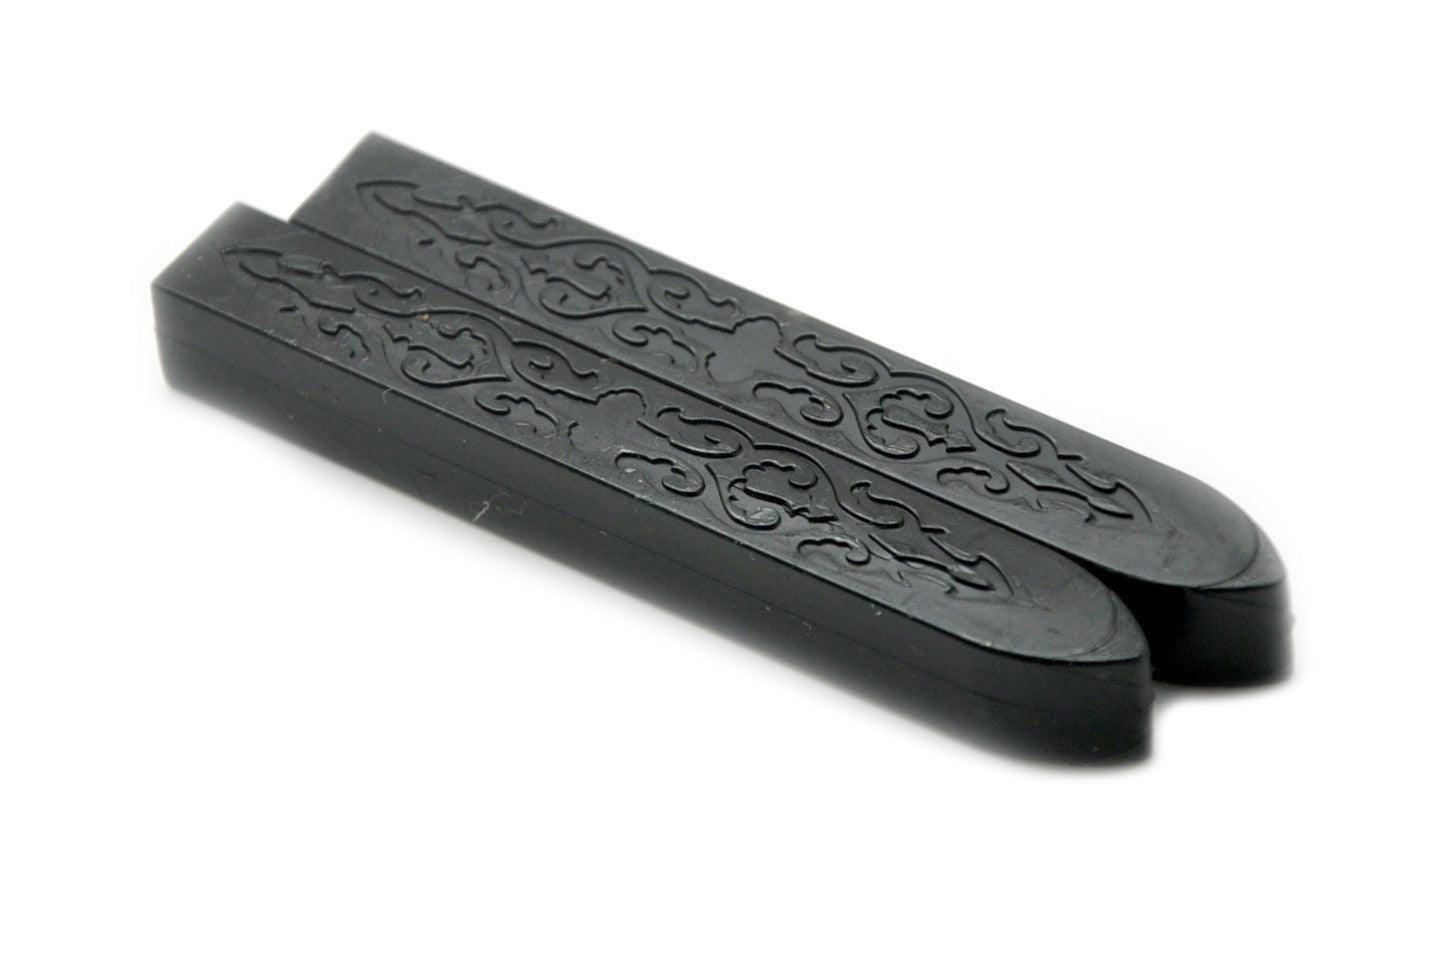 Black Filigree Non-Wick Sealing Wax Stick - Backtozero B20 - Black, Filigree non wick, Non-Wick Sitck, Non-Wick Wax, sale, Sealing Wax, Wax Stick